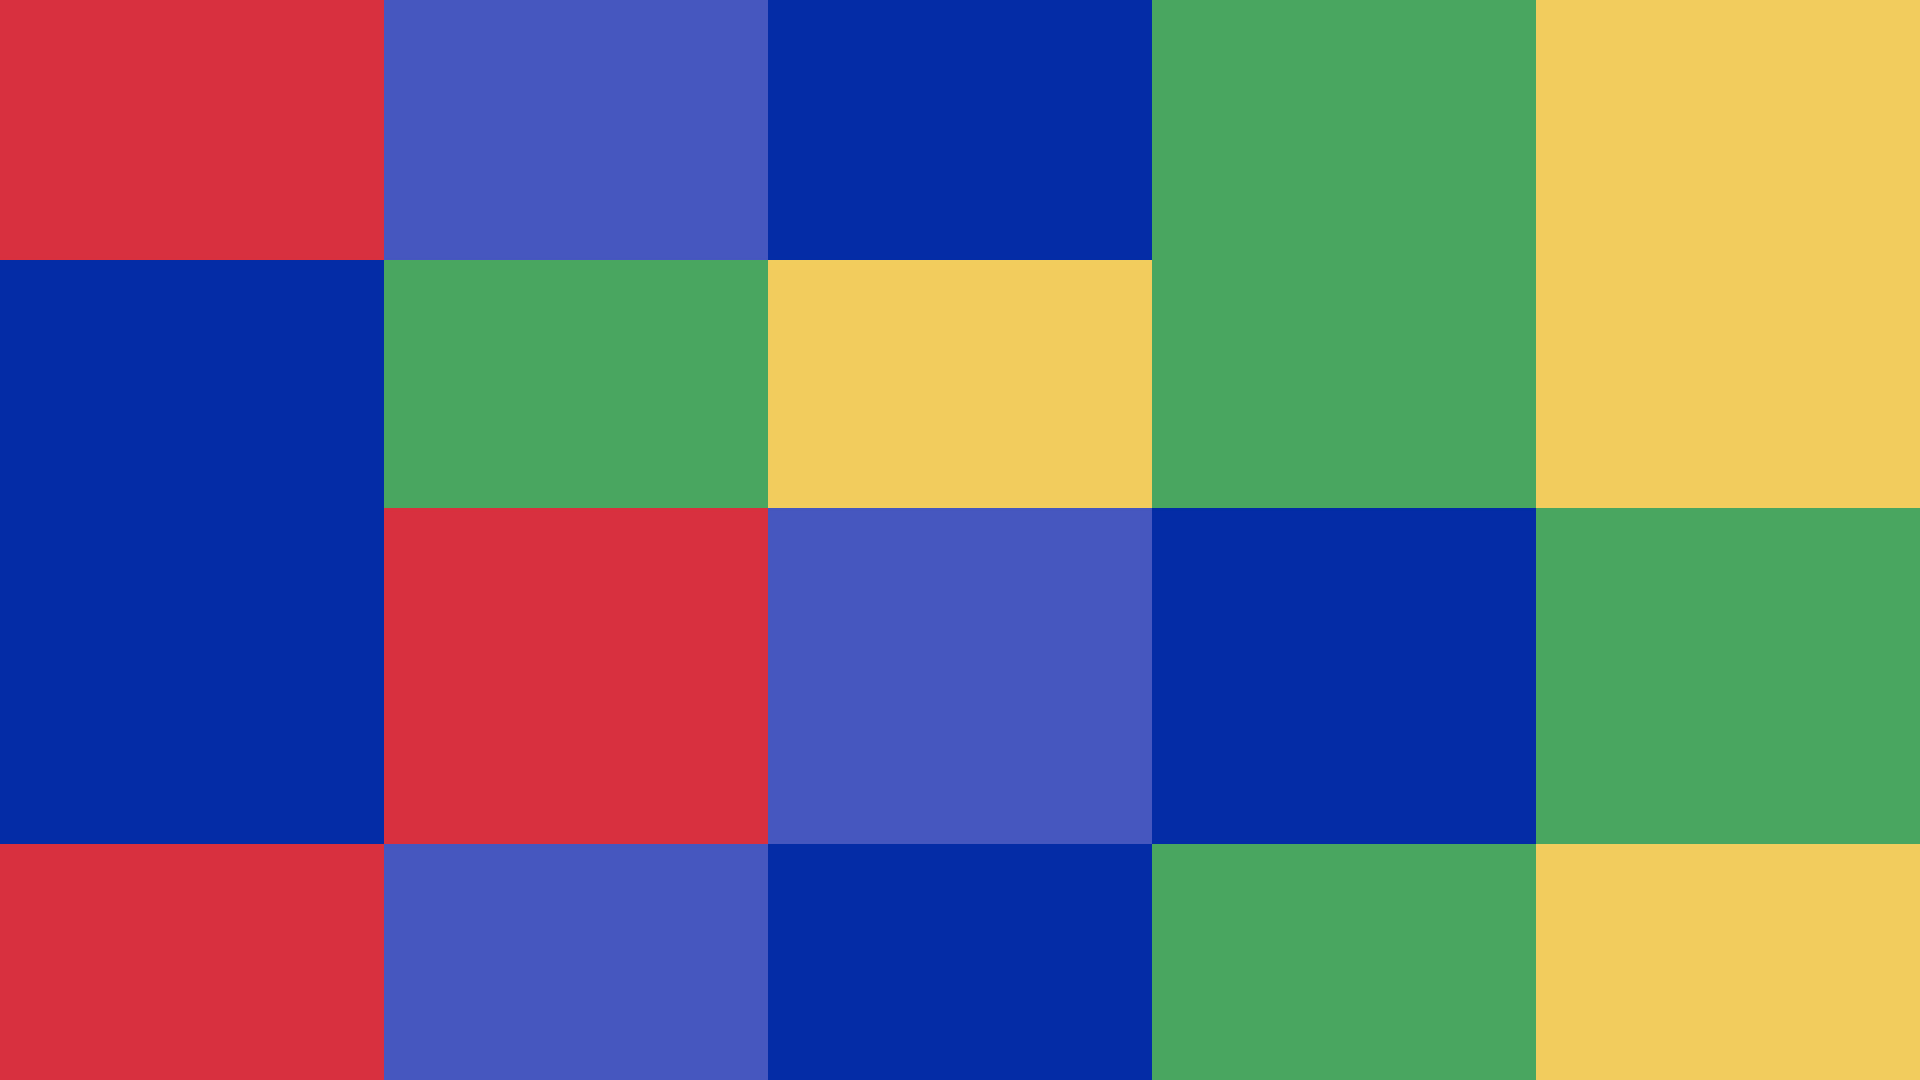 Shapes Colorful Digital Art Square Rectangle 1920x1080